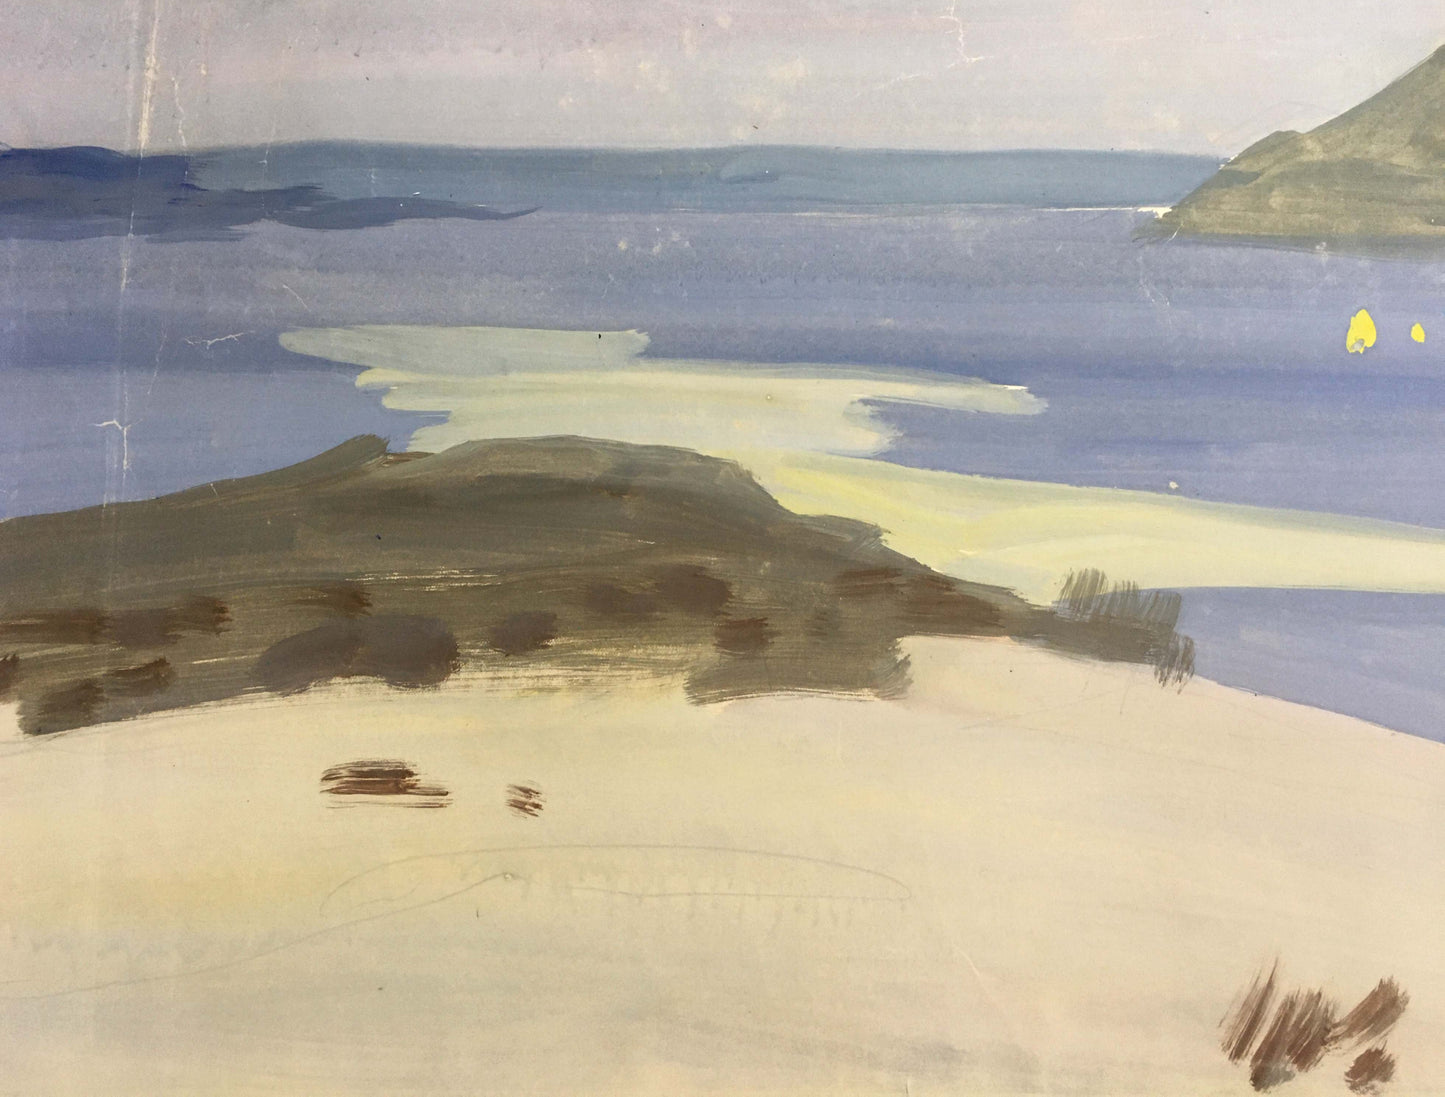 Capturing Tranquility: Vladimir Chernikov's Gouache Painting of the Shore